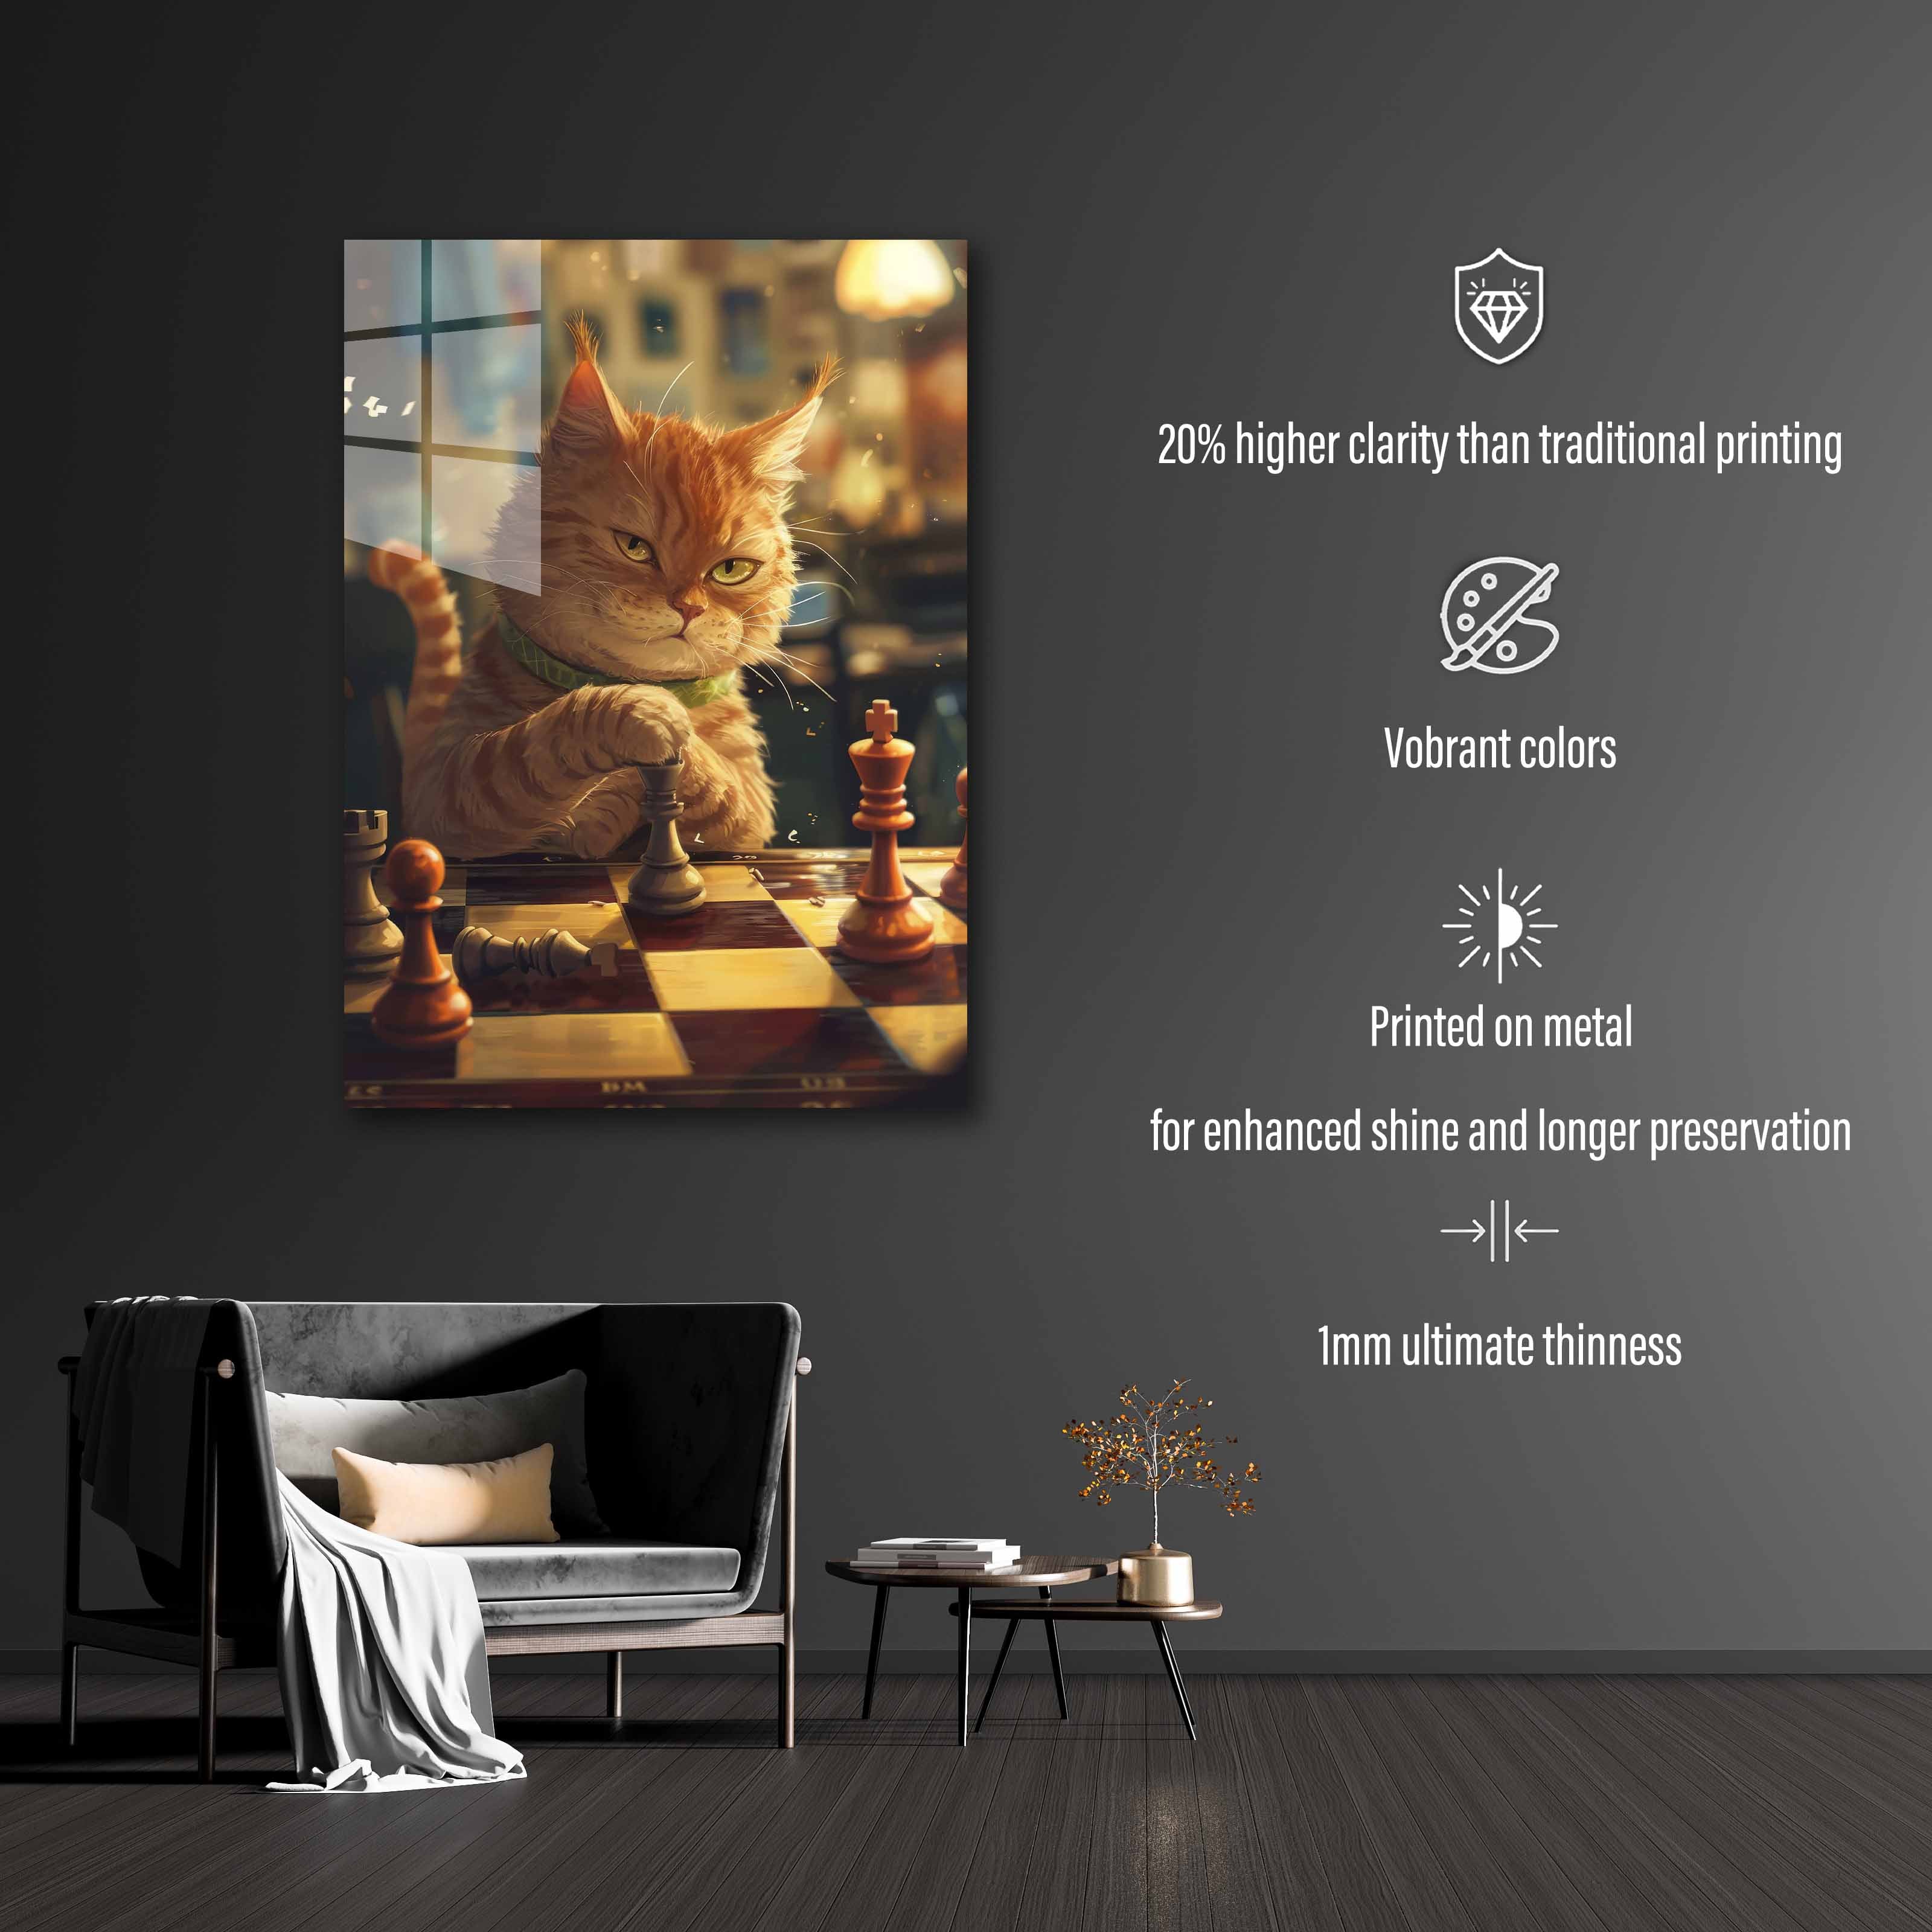 Chess Cat-designed by @Moqotib